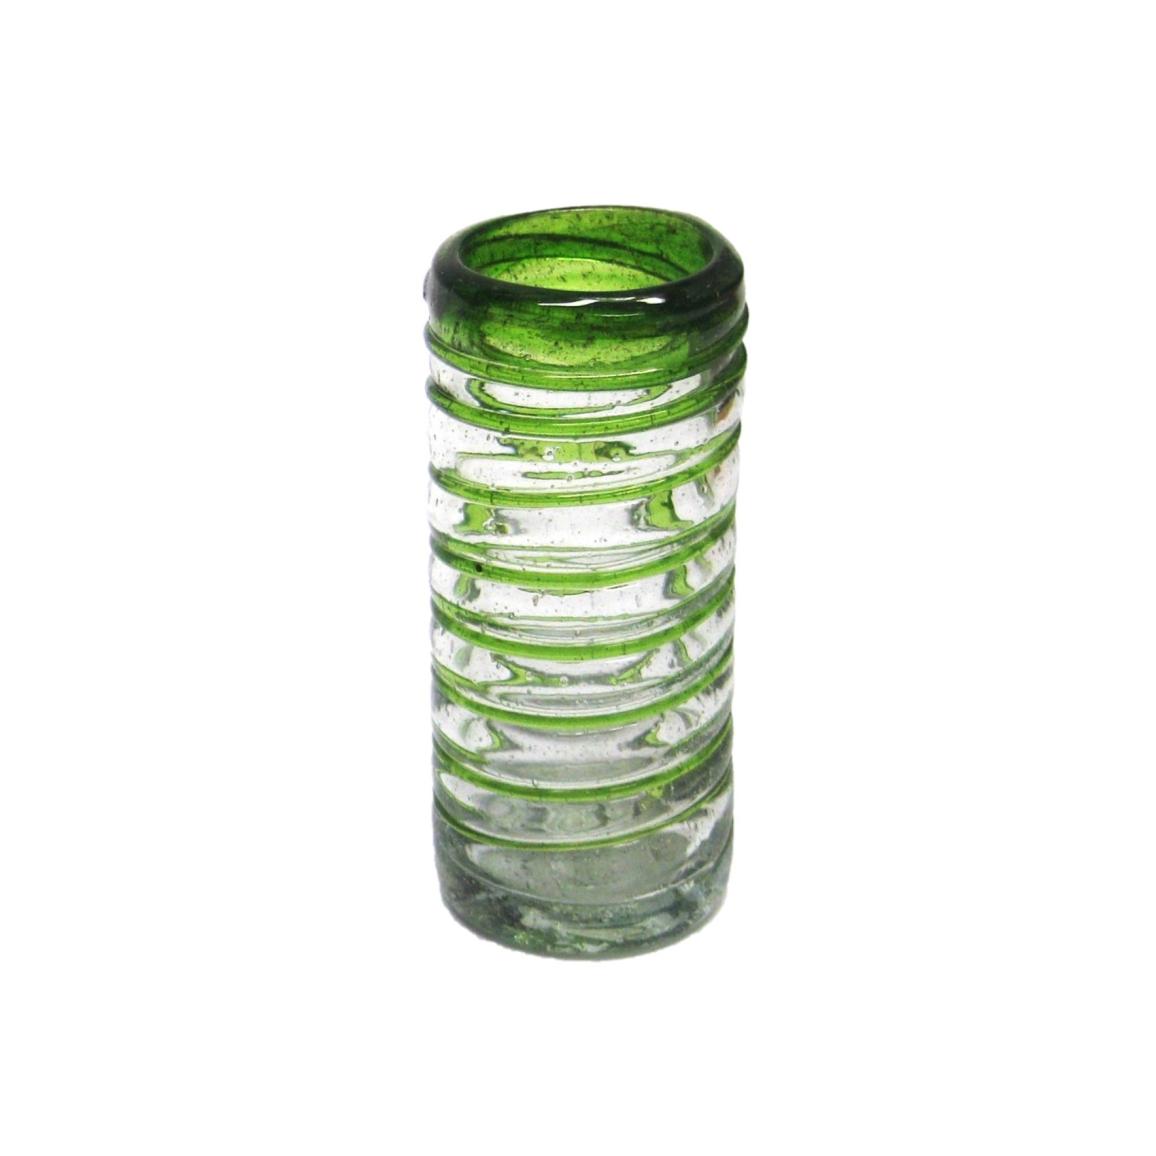 Espiral / Juego de 6 'caballitos' con espiral verde esmeralda / Lazos verde esmeralda giran para cubrir stos preciosos 'caballitos', perfectos para fiestas o disfrutar de su licor favorito.